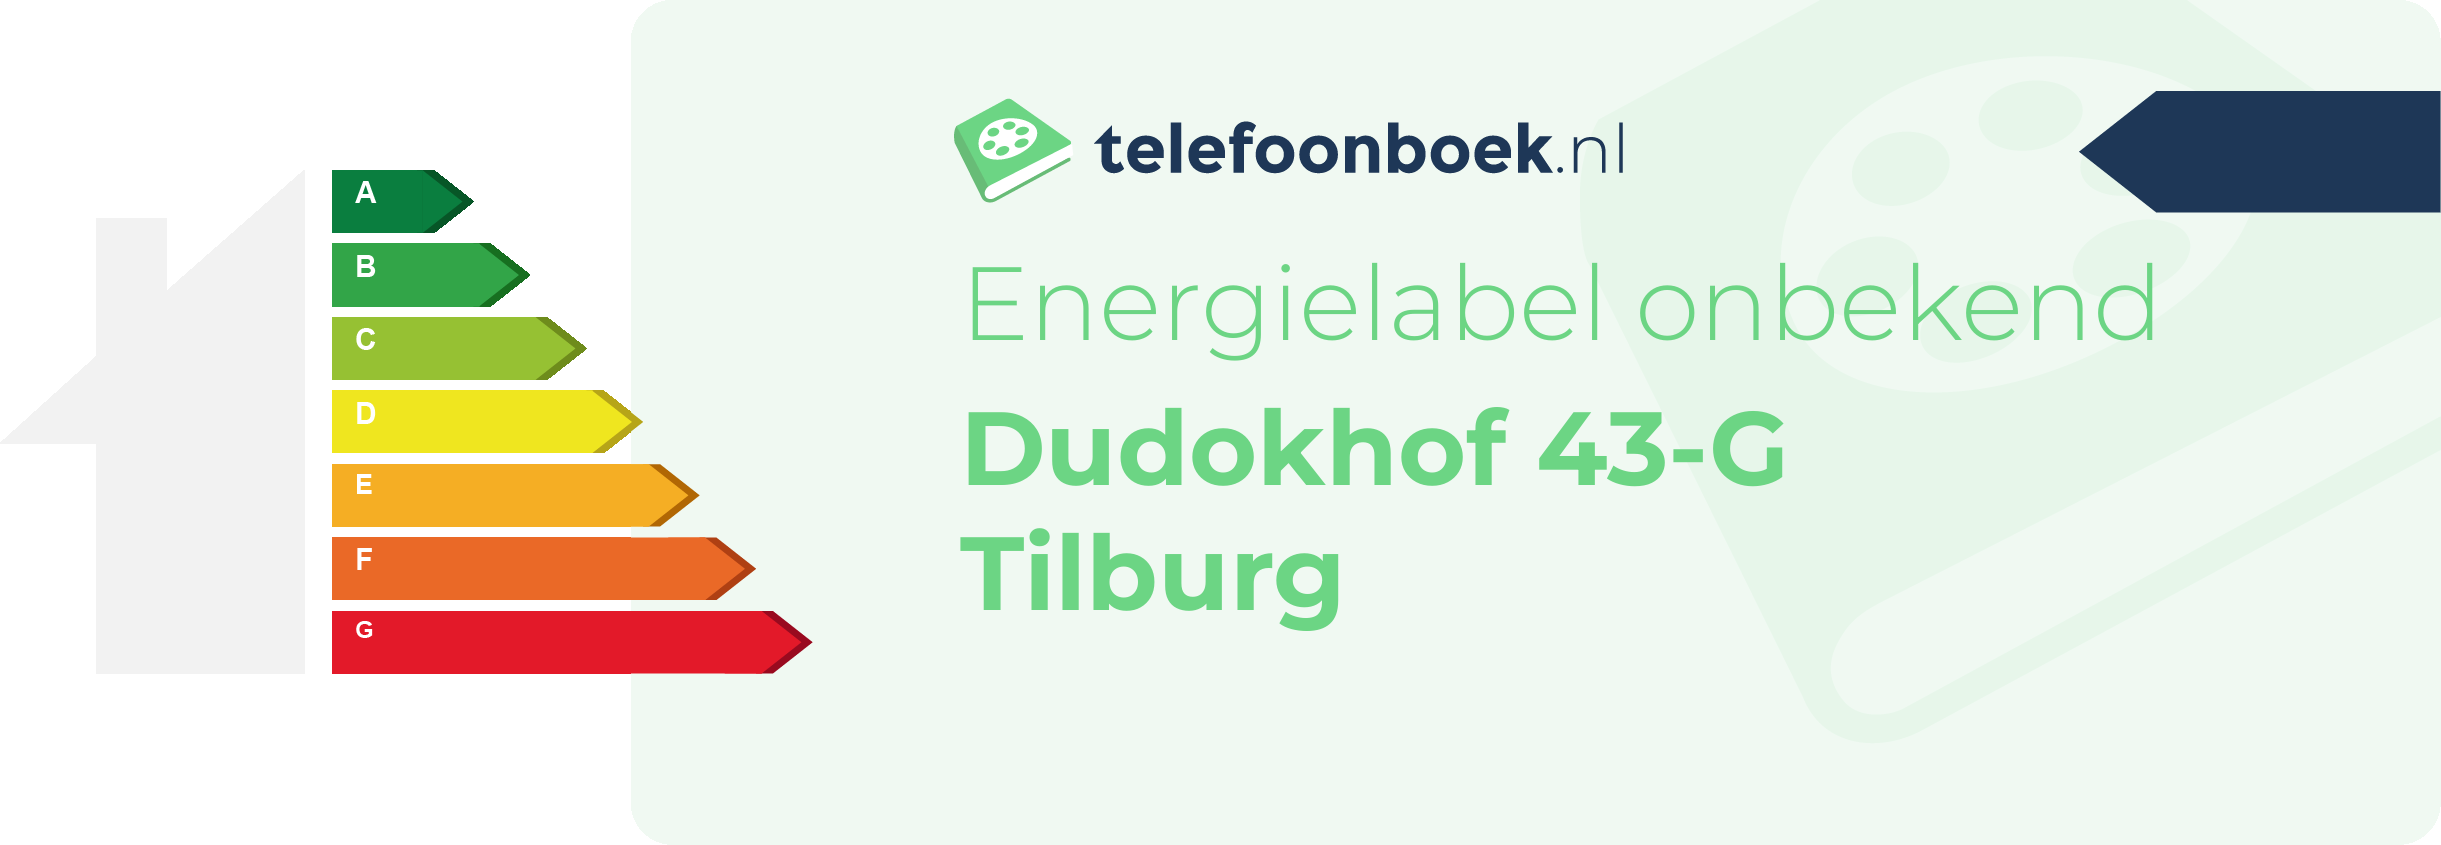 Energielabel Dudokhof 43-G Tilburg